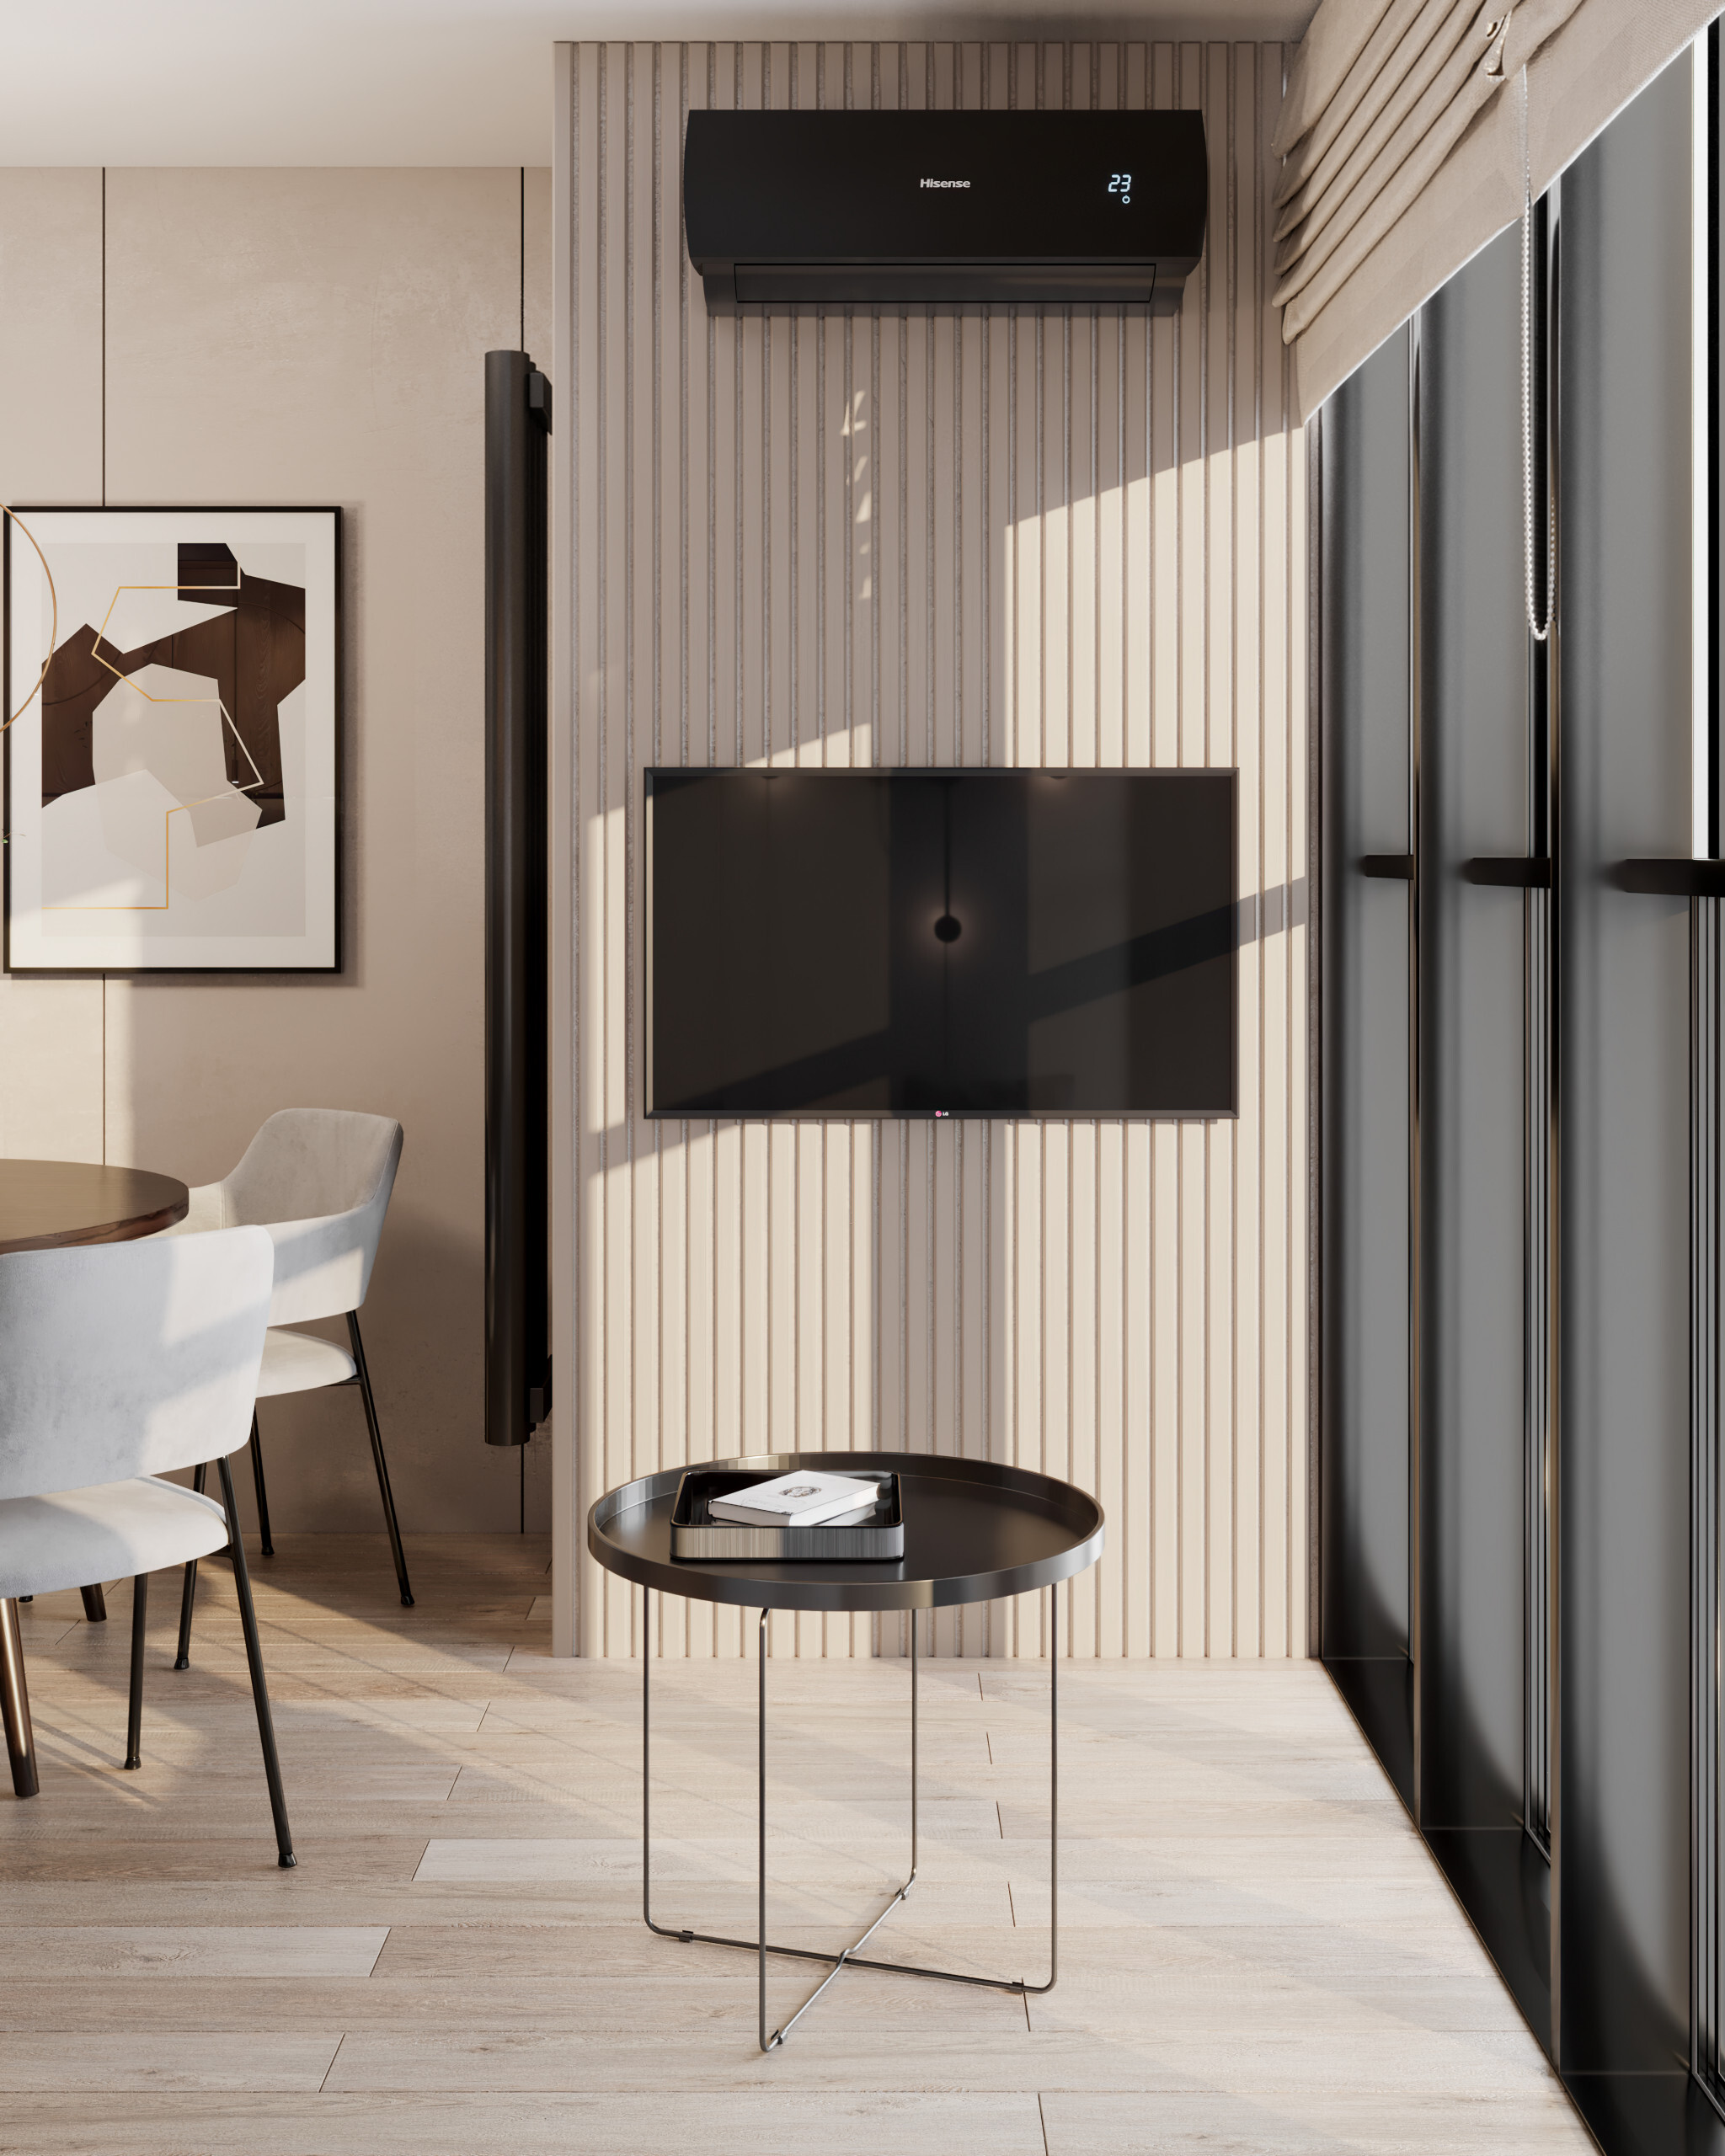 Интерьер кухни с панно за телевизором, стеной с телевизором, телевизором на стене и керамогранитом на стену с телевизором в современном стиле